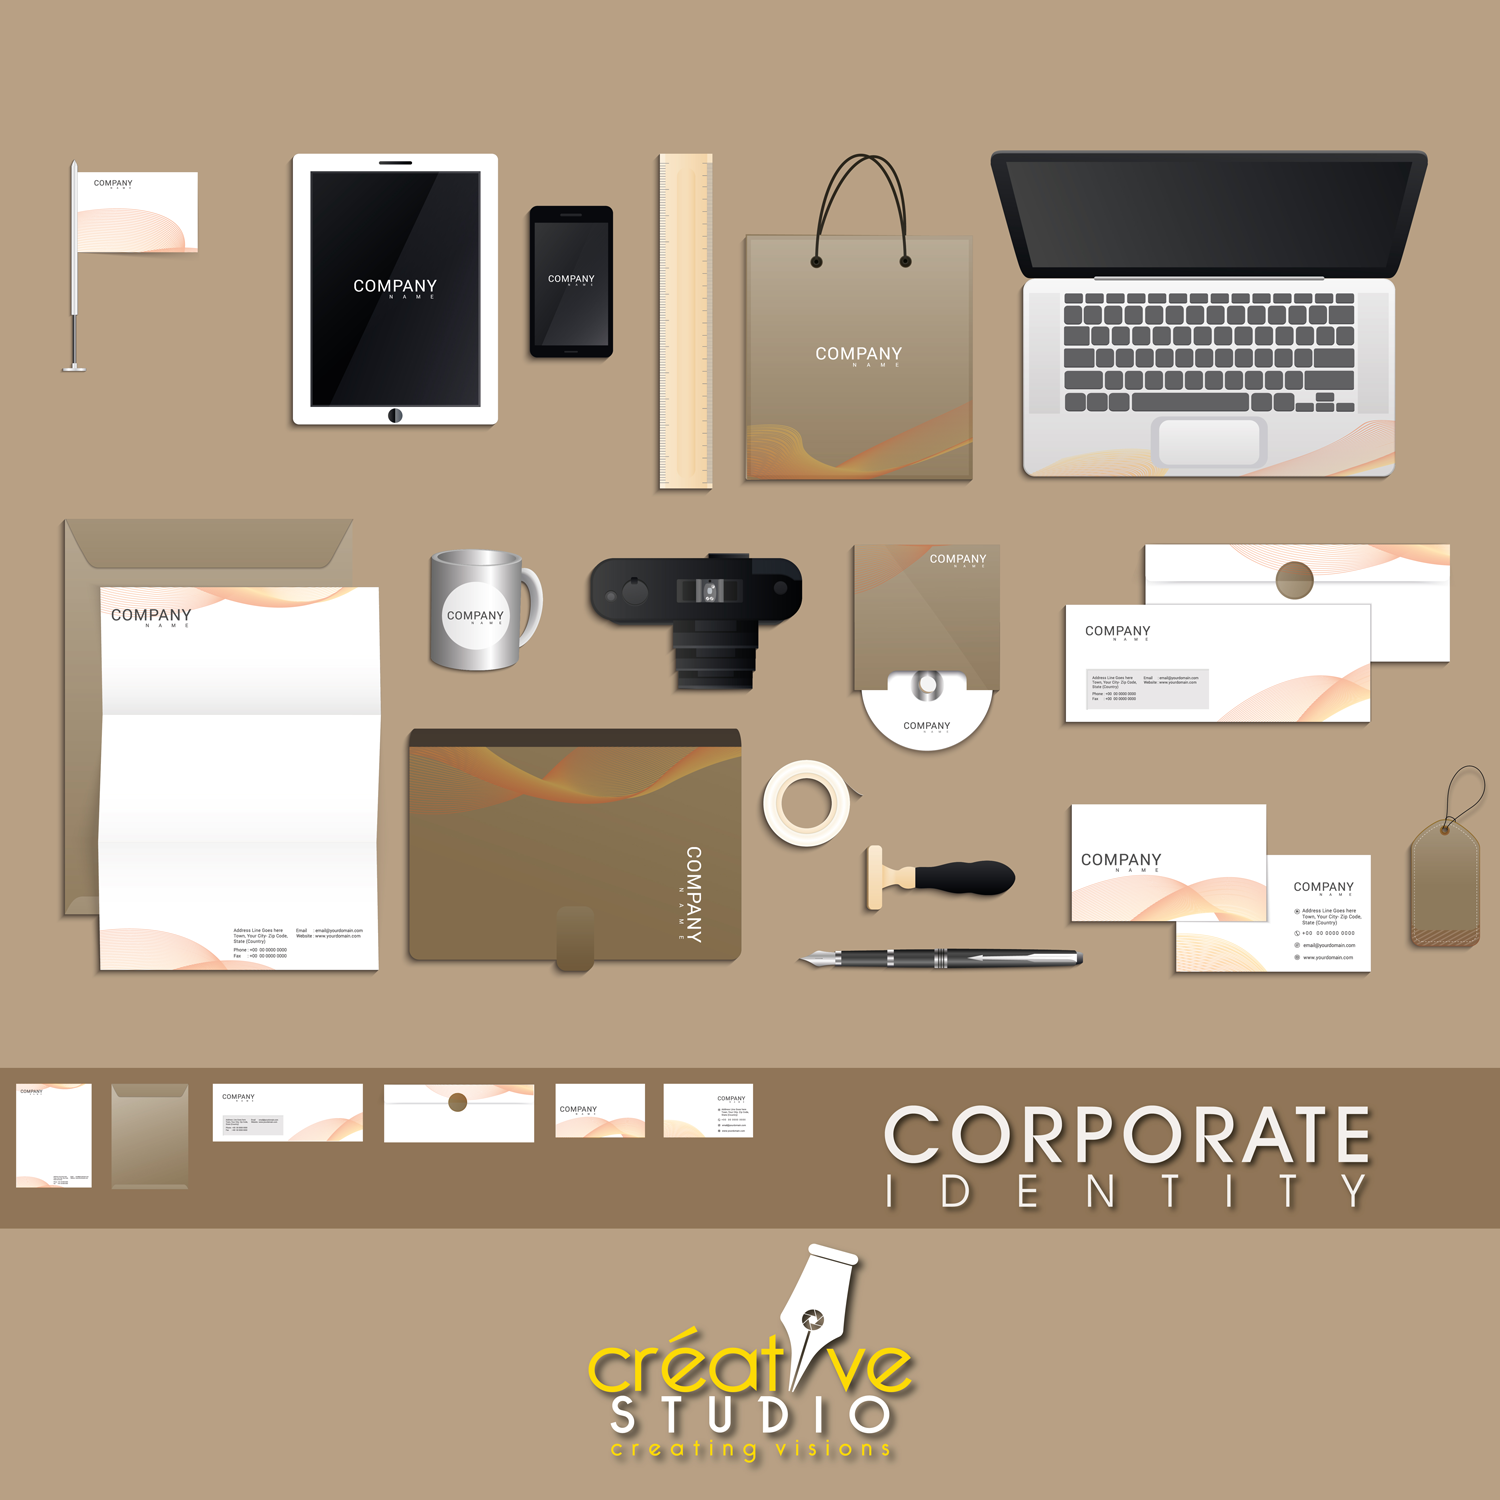 corporate identity 3 01 - Corporate Identity